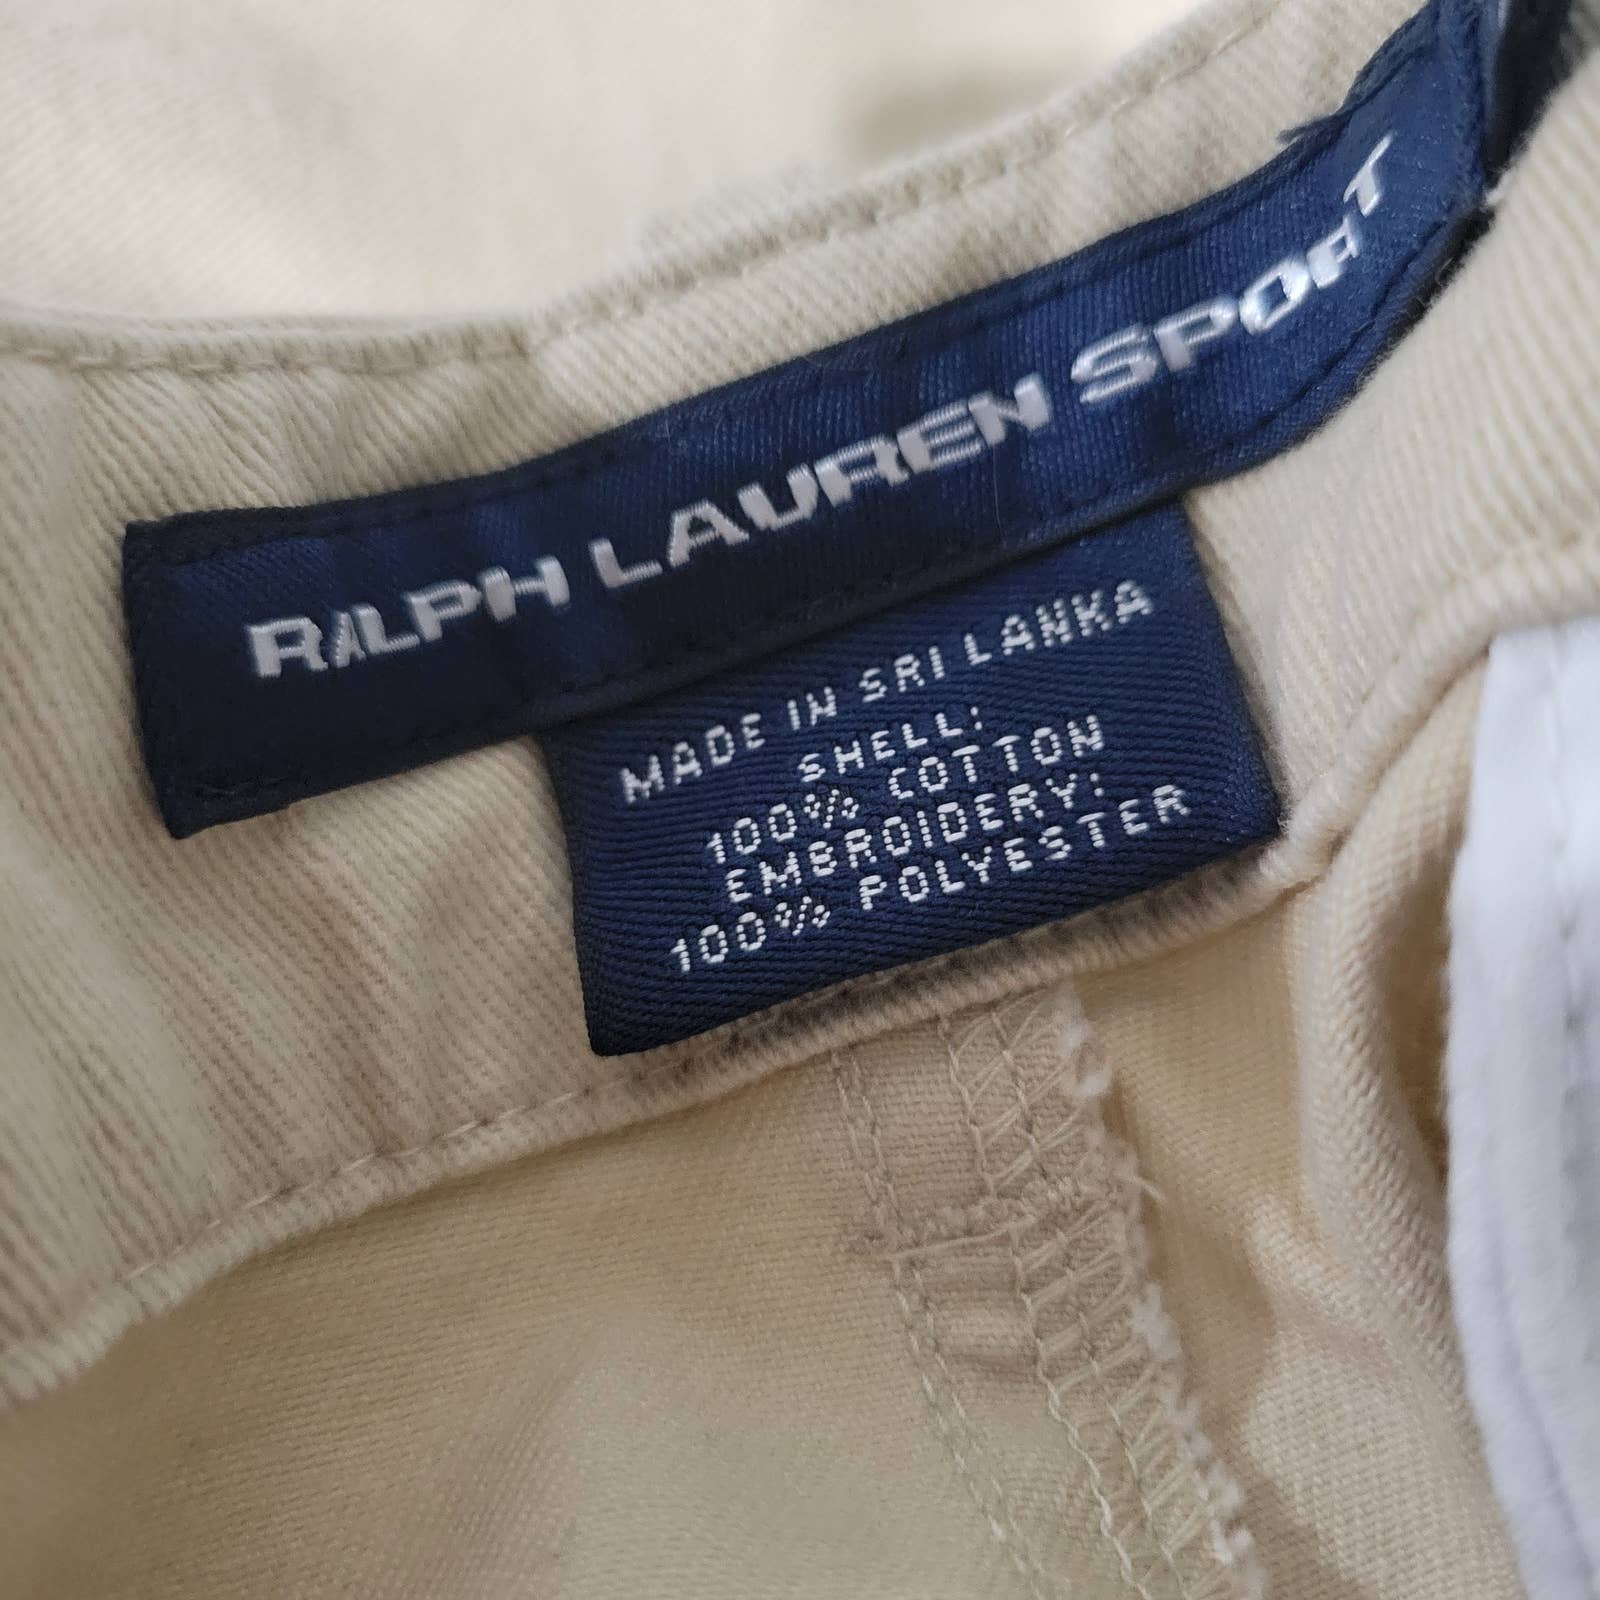 Ralph Lauren Sport Shorts Tan Mid Rise Chino Cotton Polo Pony Print Logo Size 6